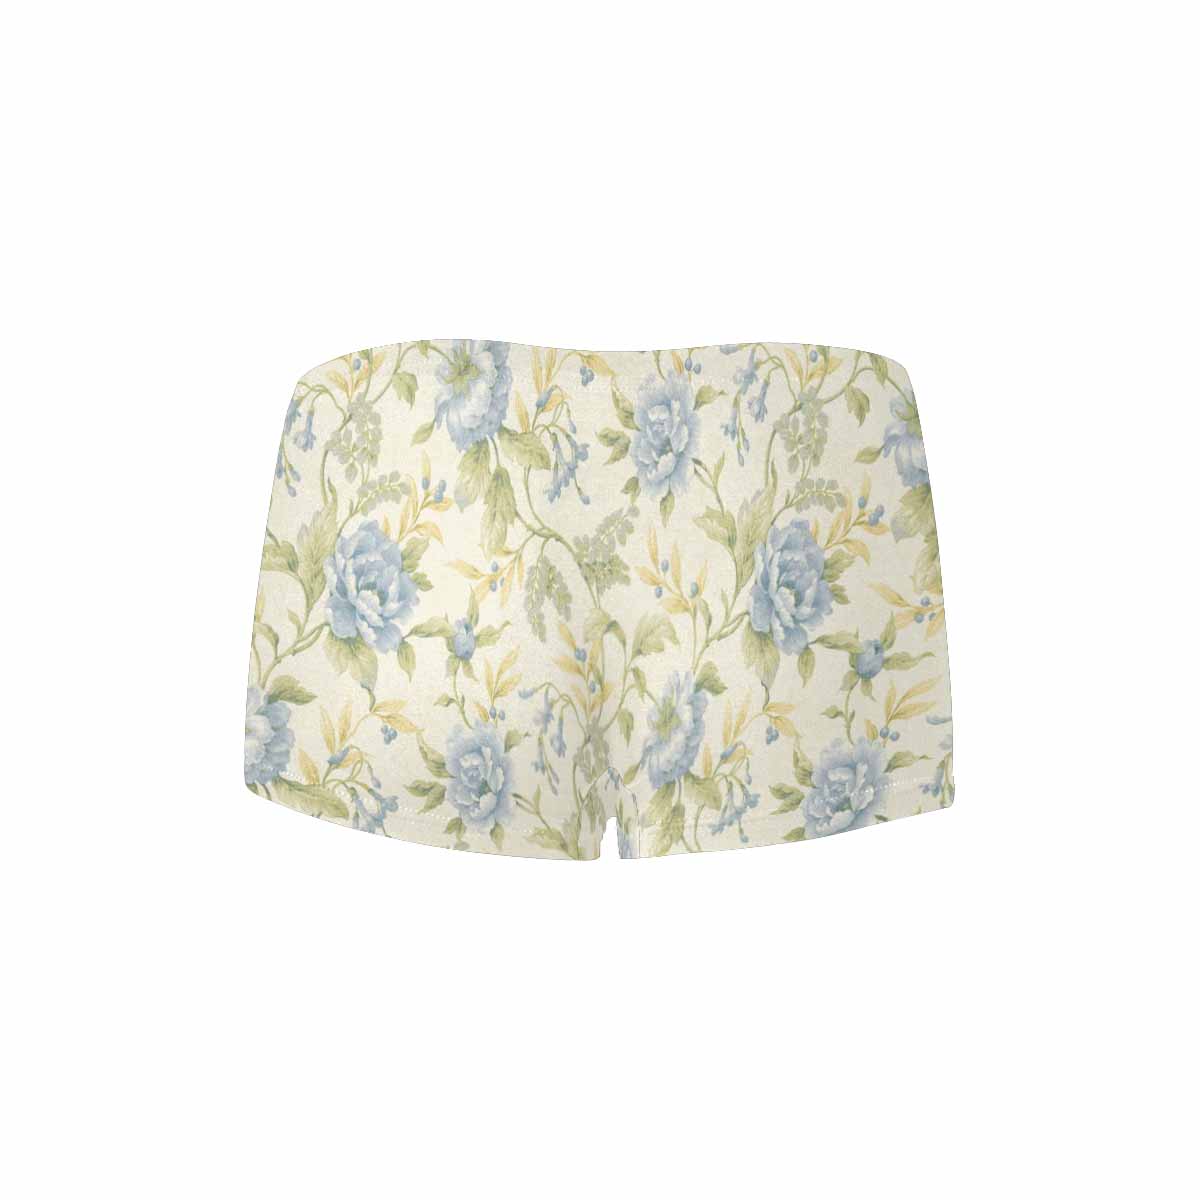 Floral 2, boyshorts, daisy dukes, pum pum shorts, panties, design 04